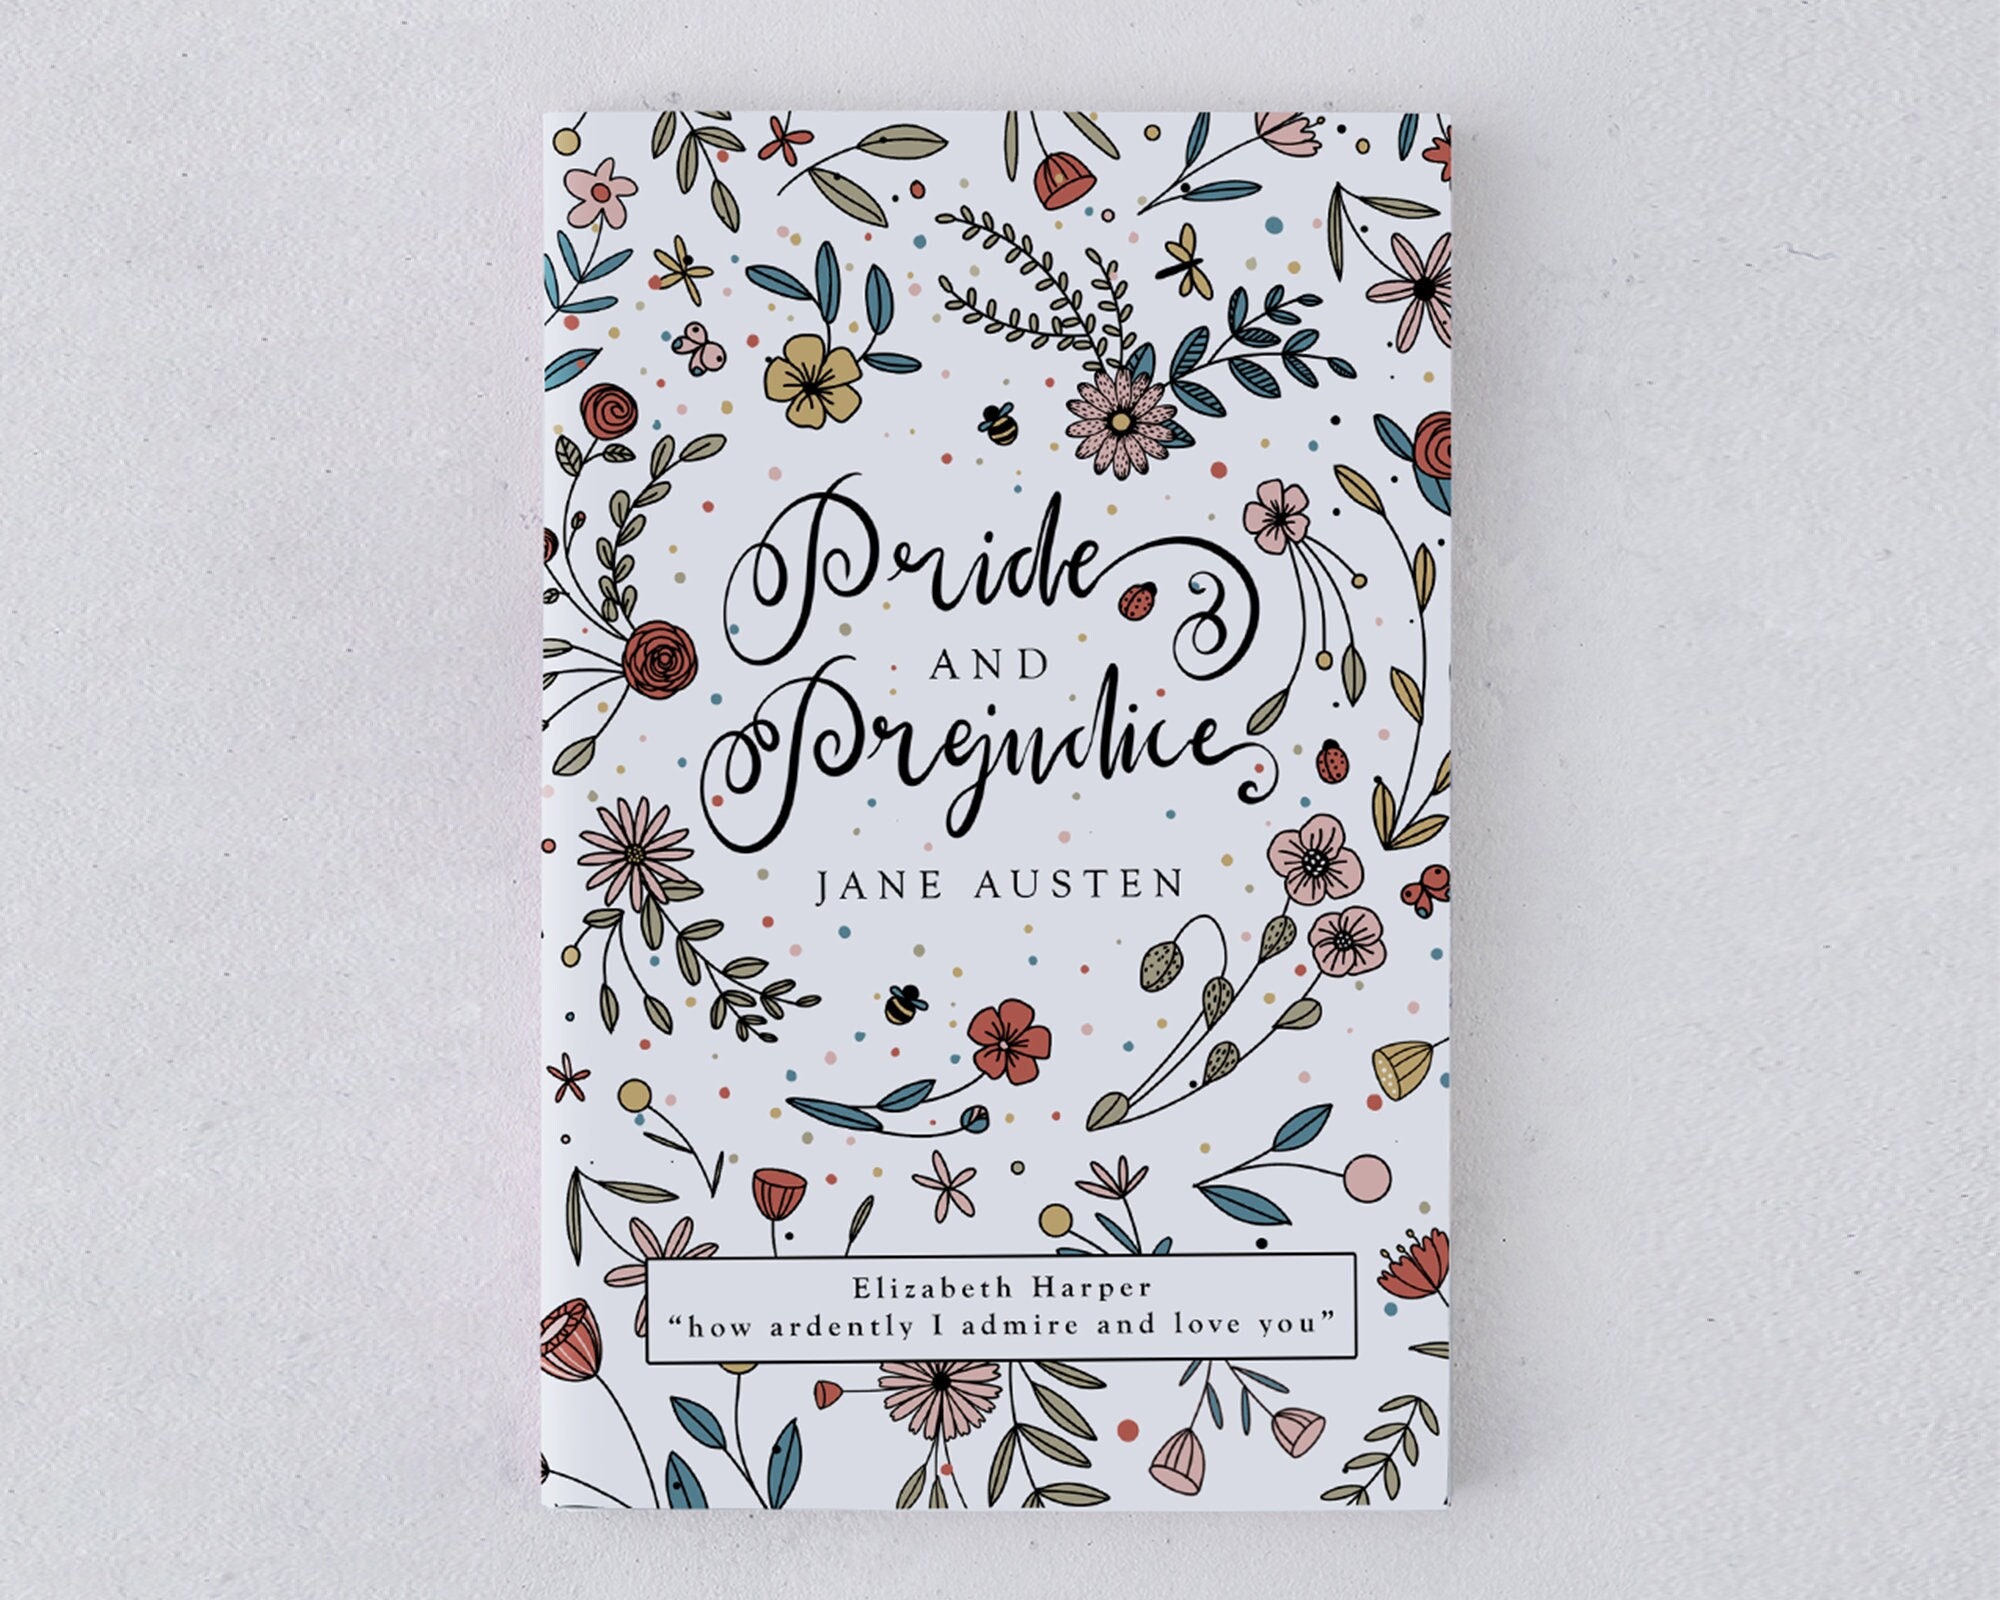 Pride & Prejudice Jane Austen Study Text